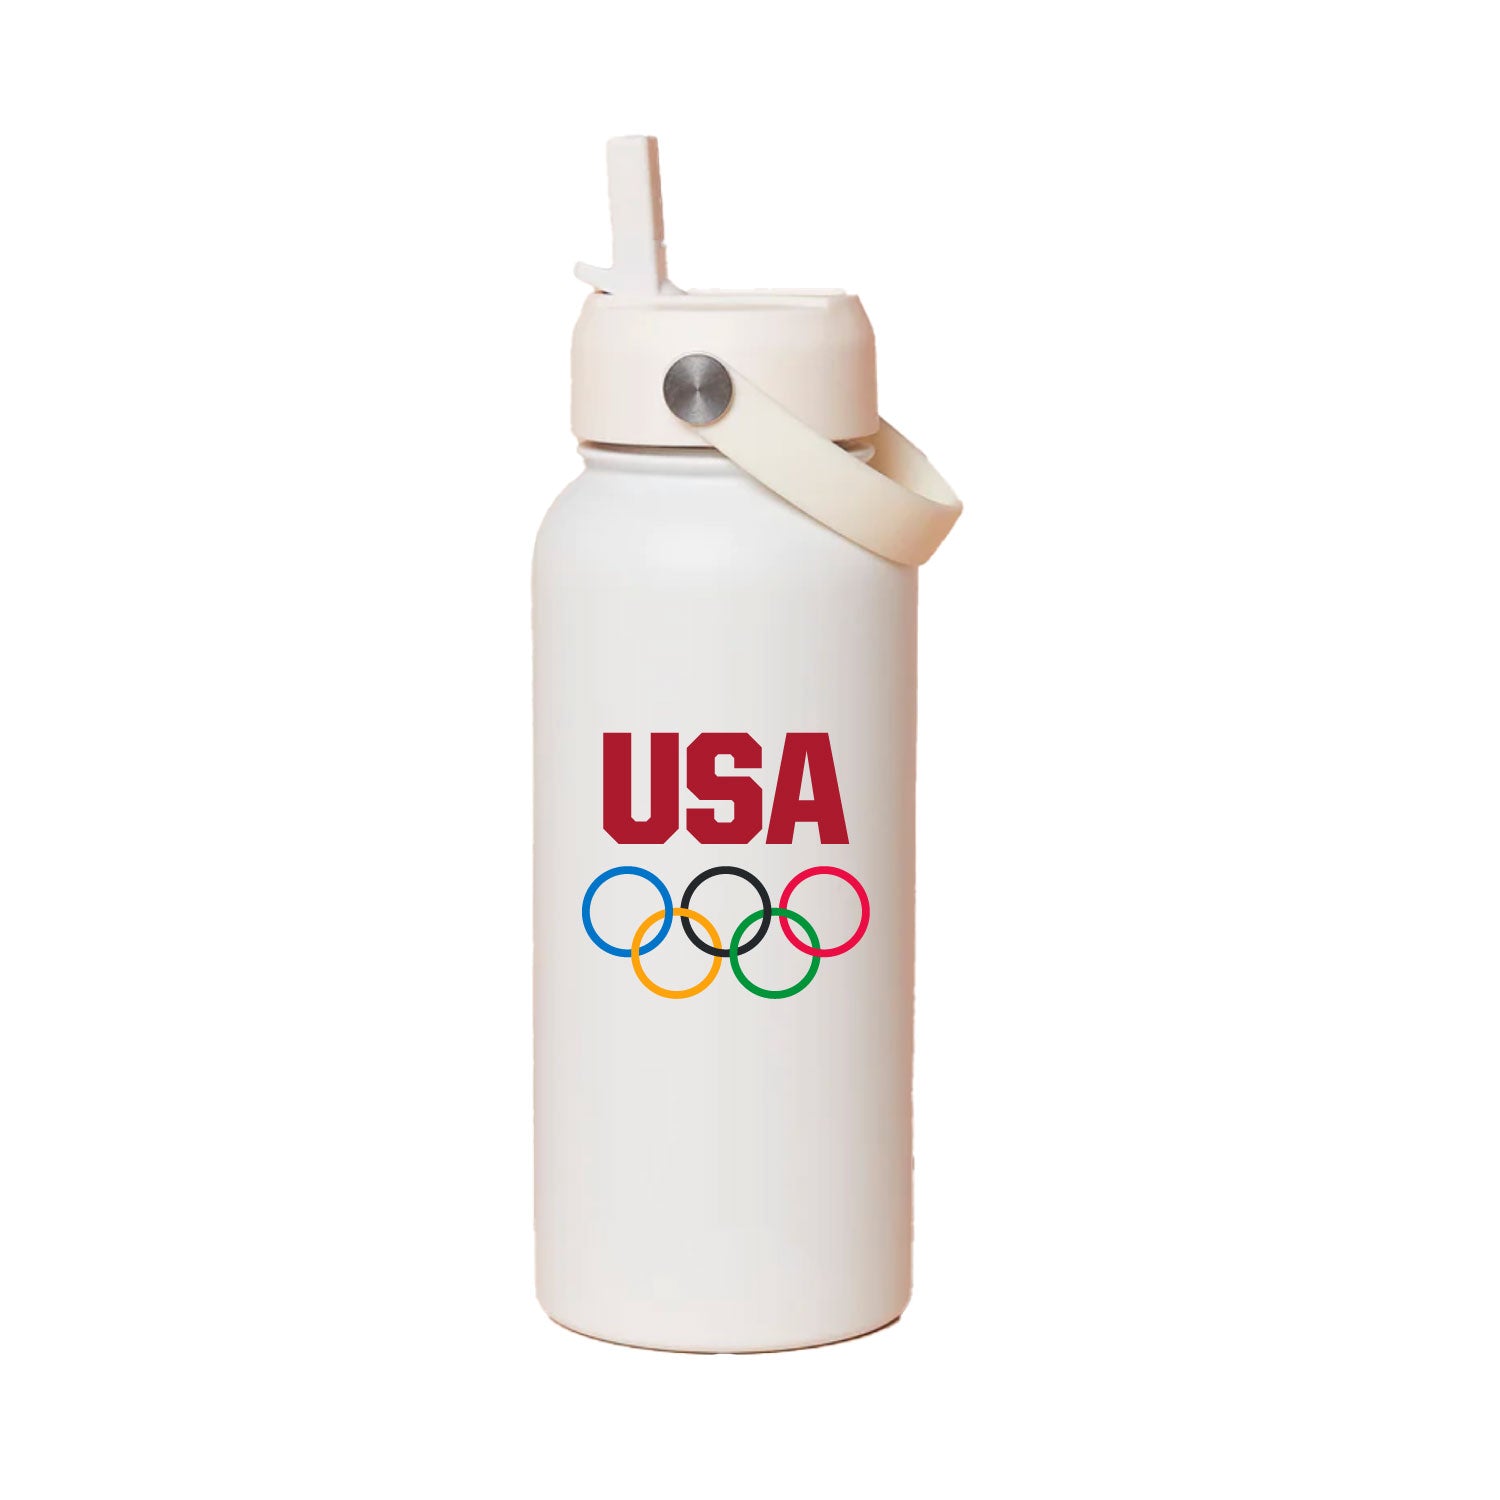 USOC USA Olympic Rings Metal Water Bottle